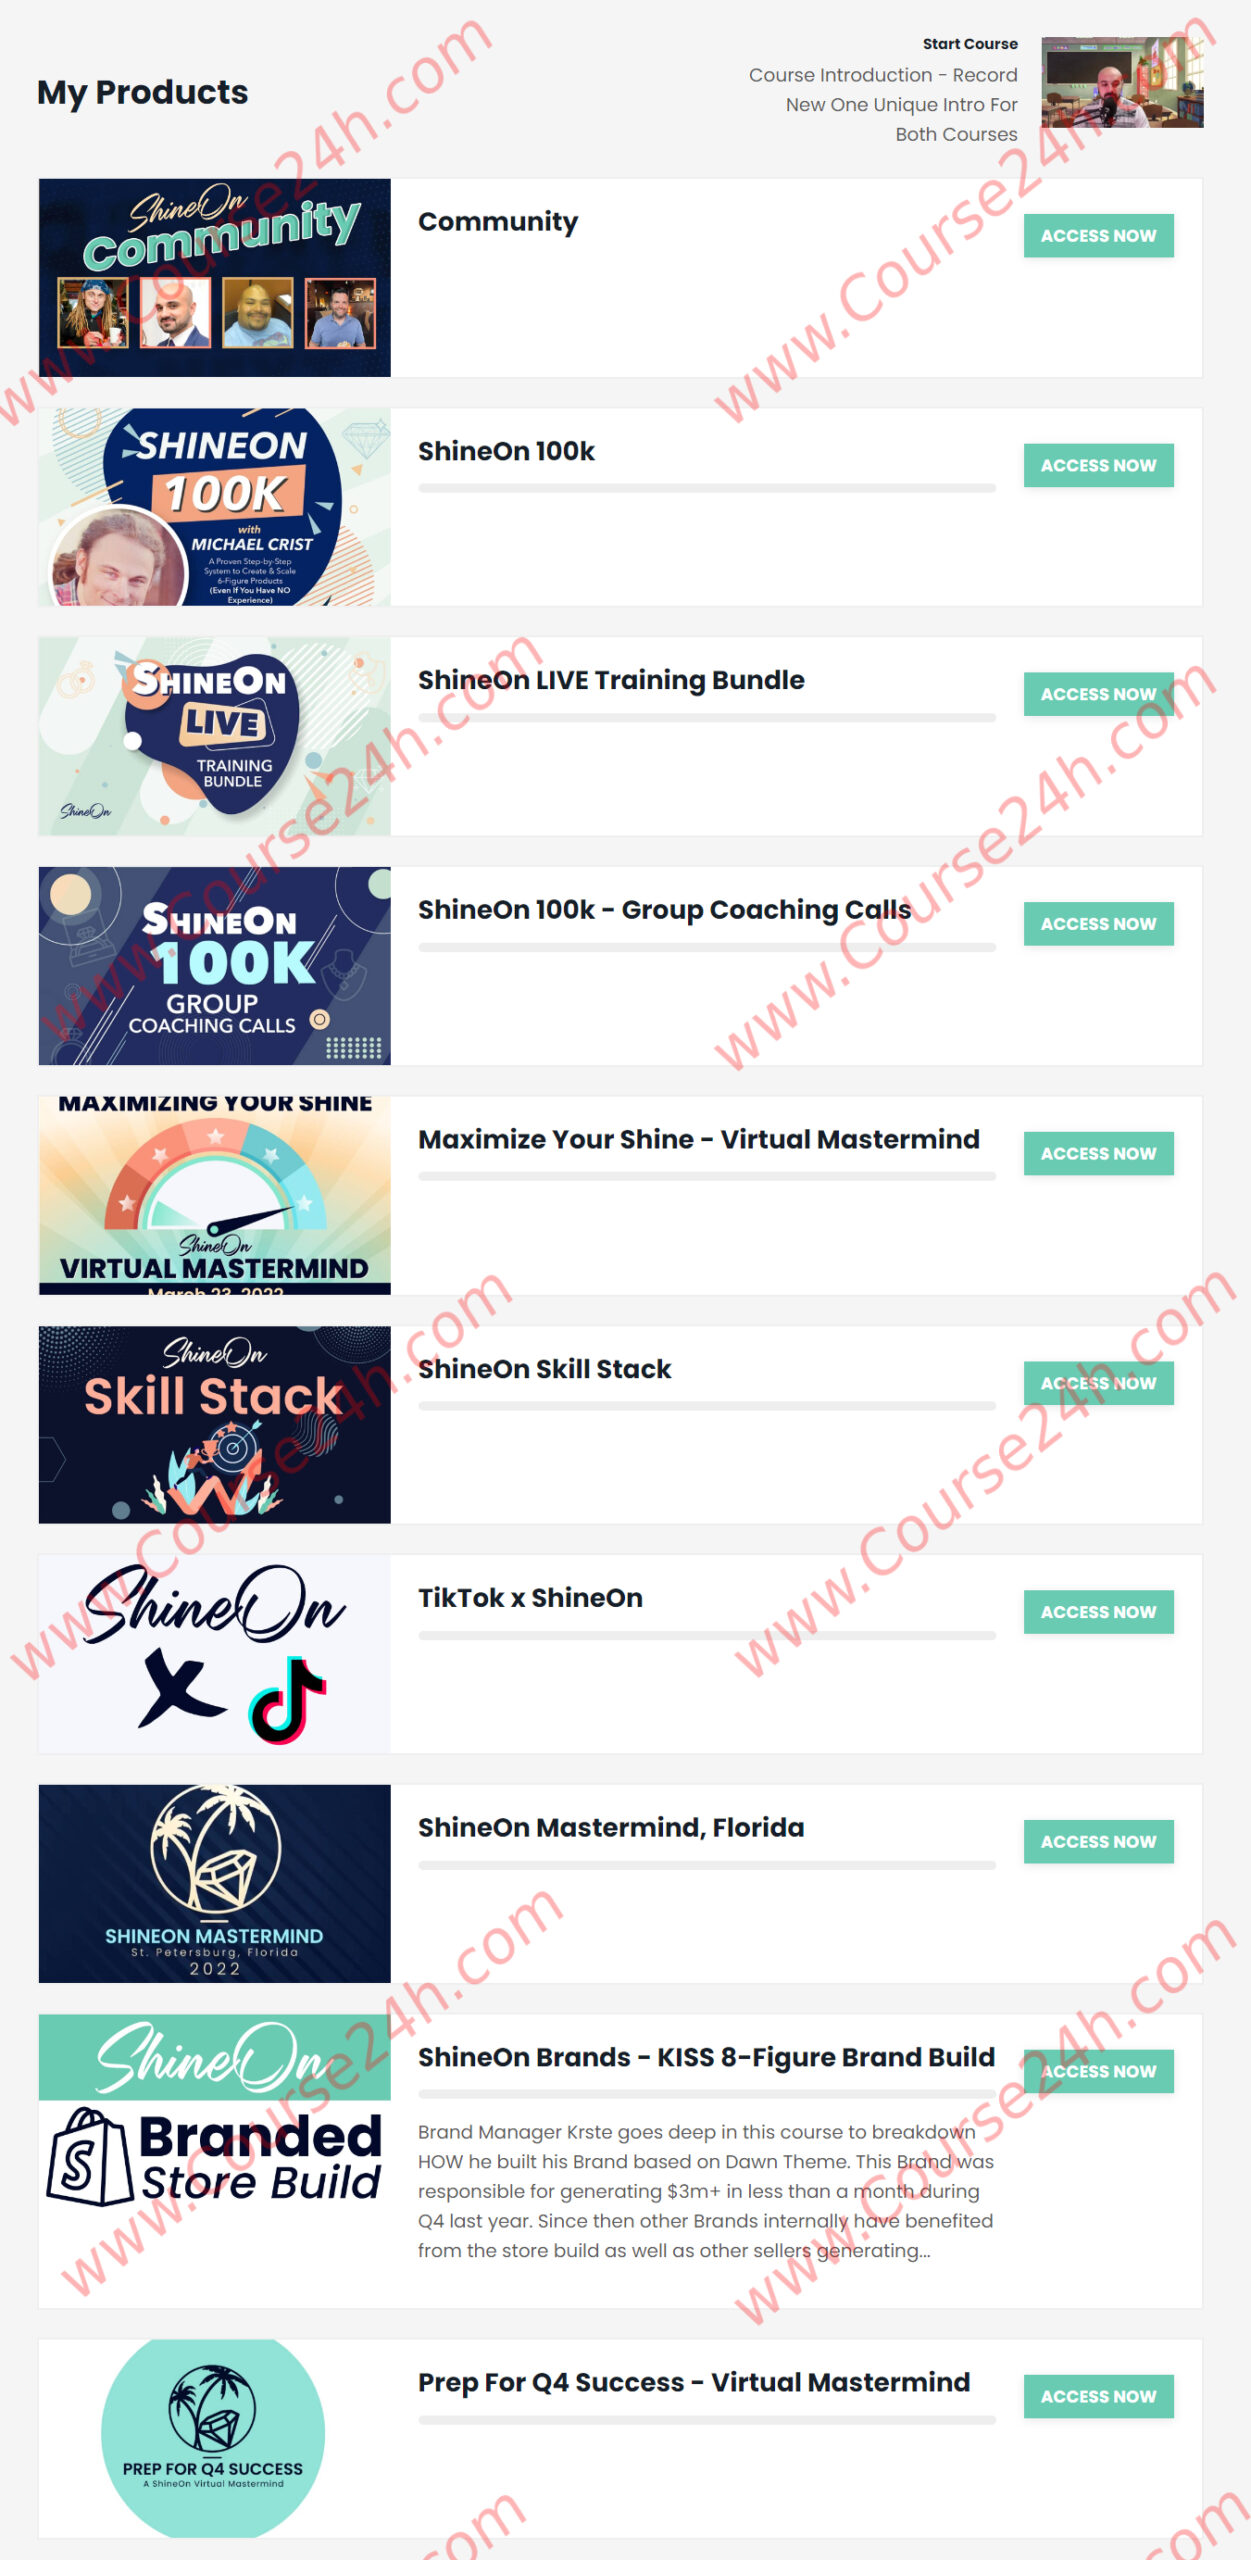 ShineOn Treasury - Begin Your Journey To 100K Sales